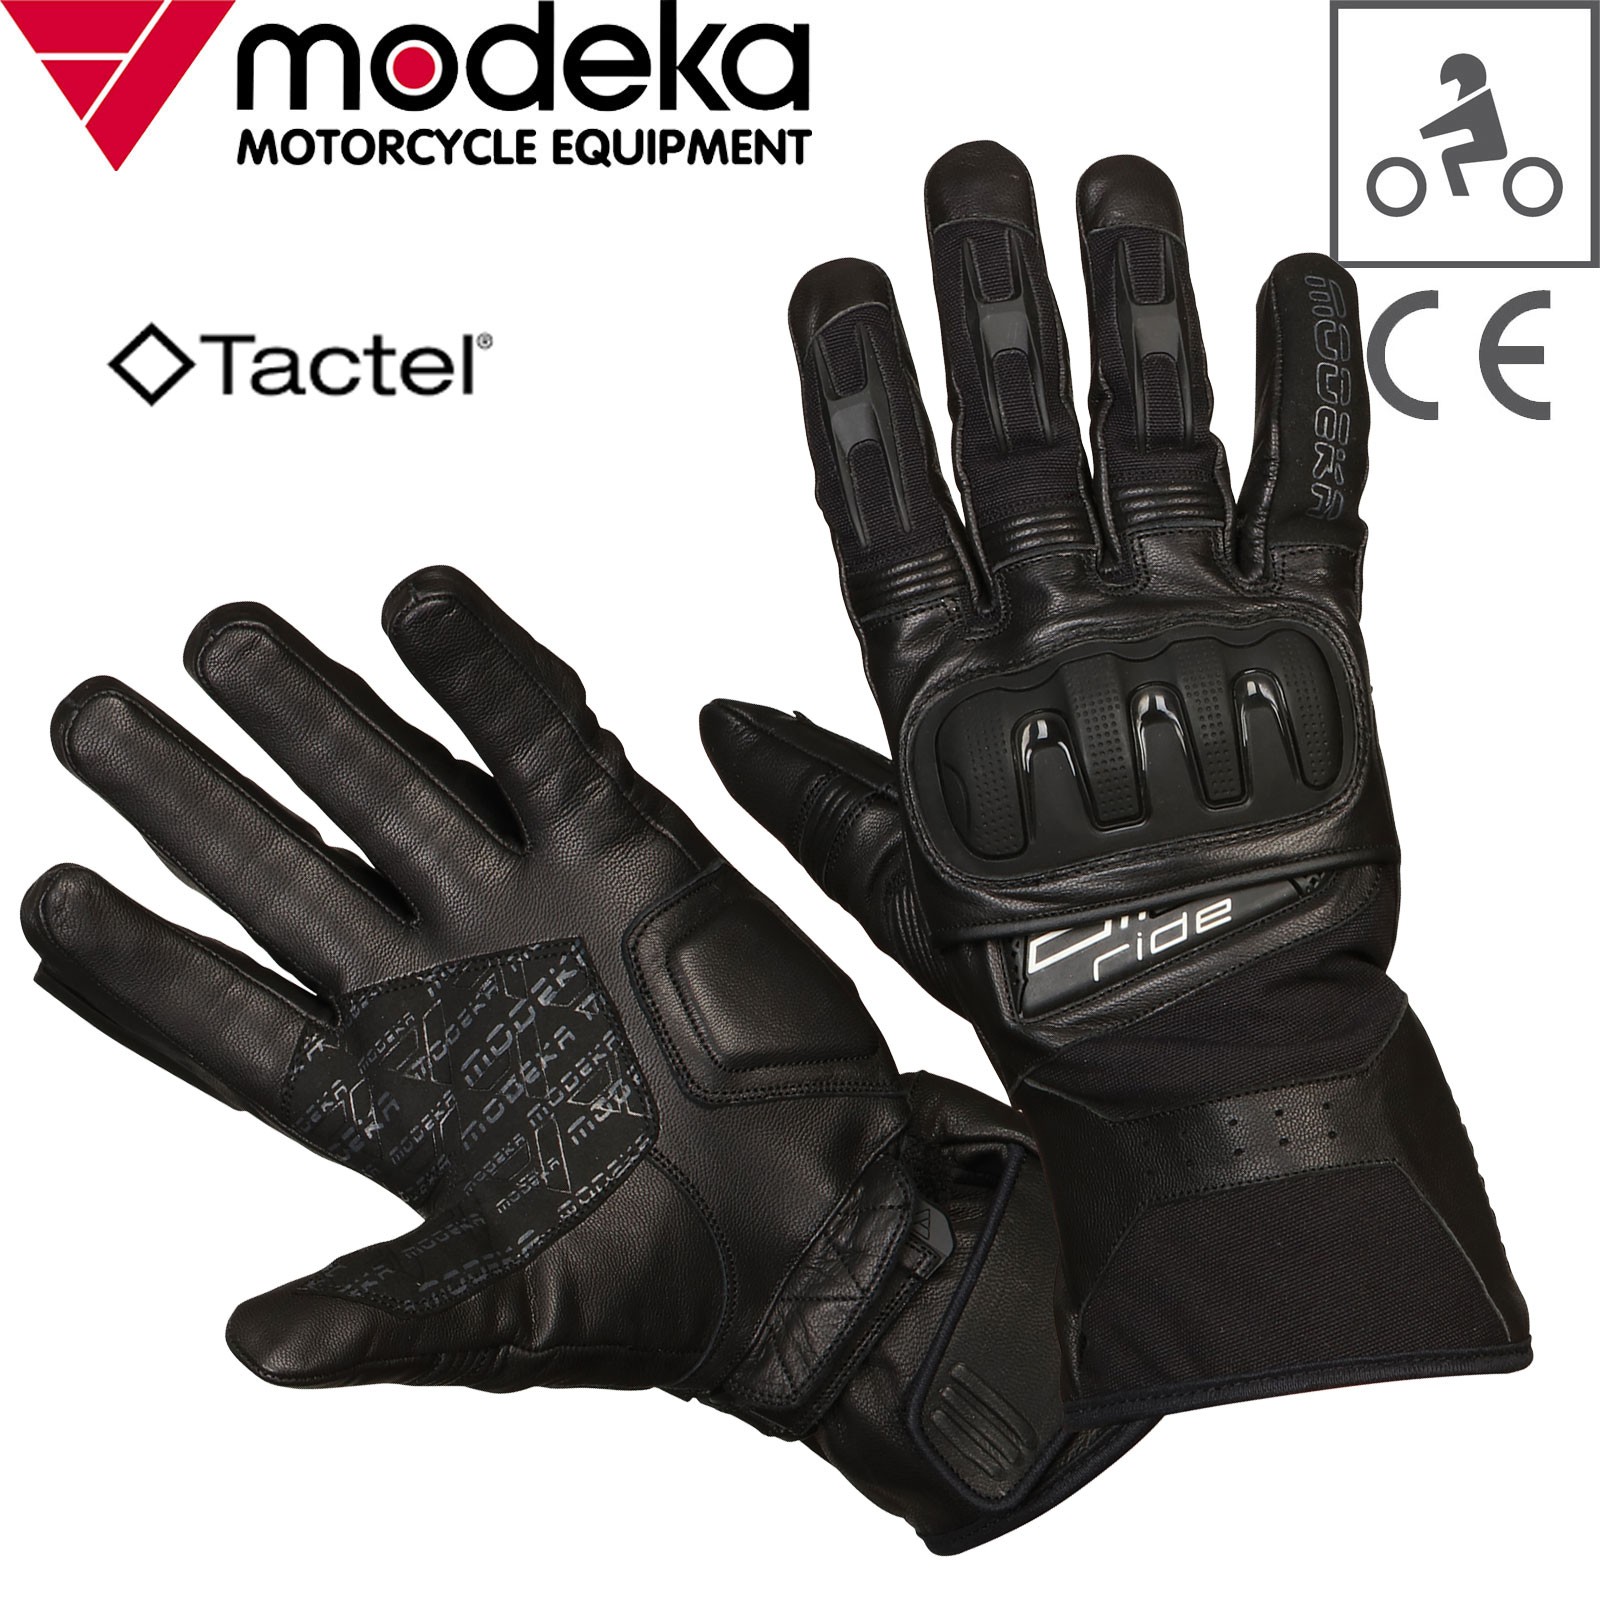 Modeka Aras Handschuh schwarz Motorradhandschuh Leder 